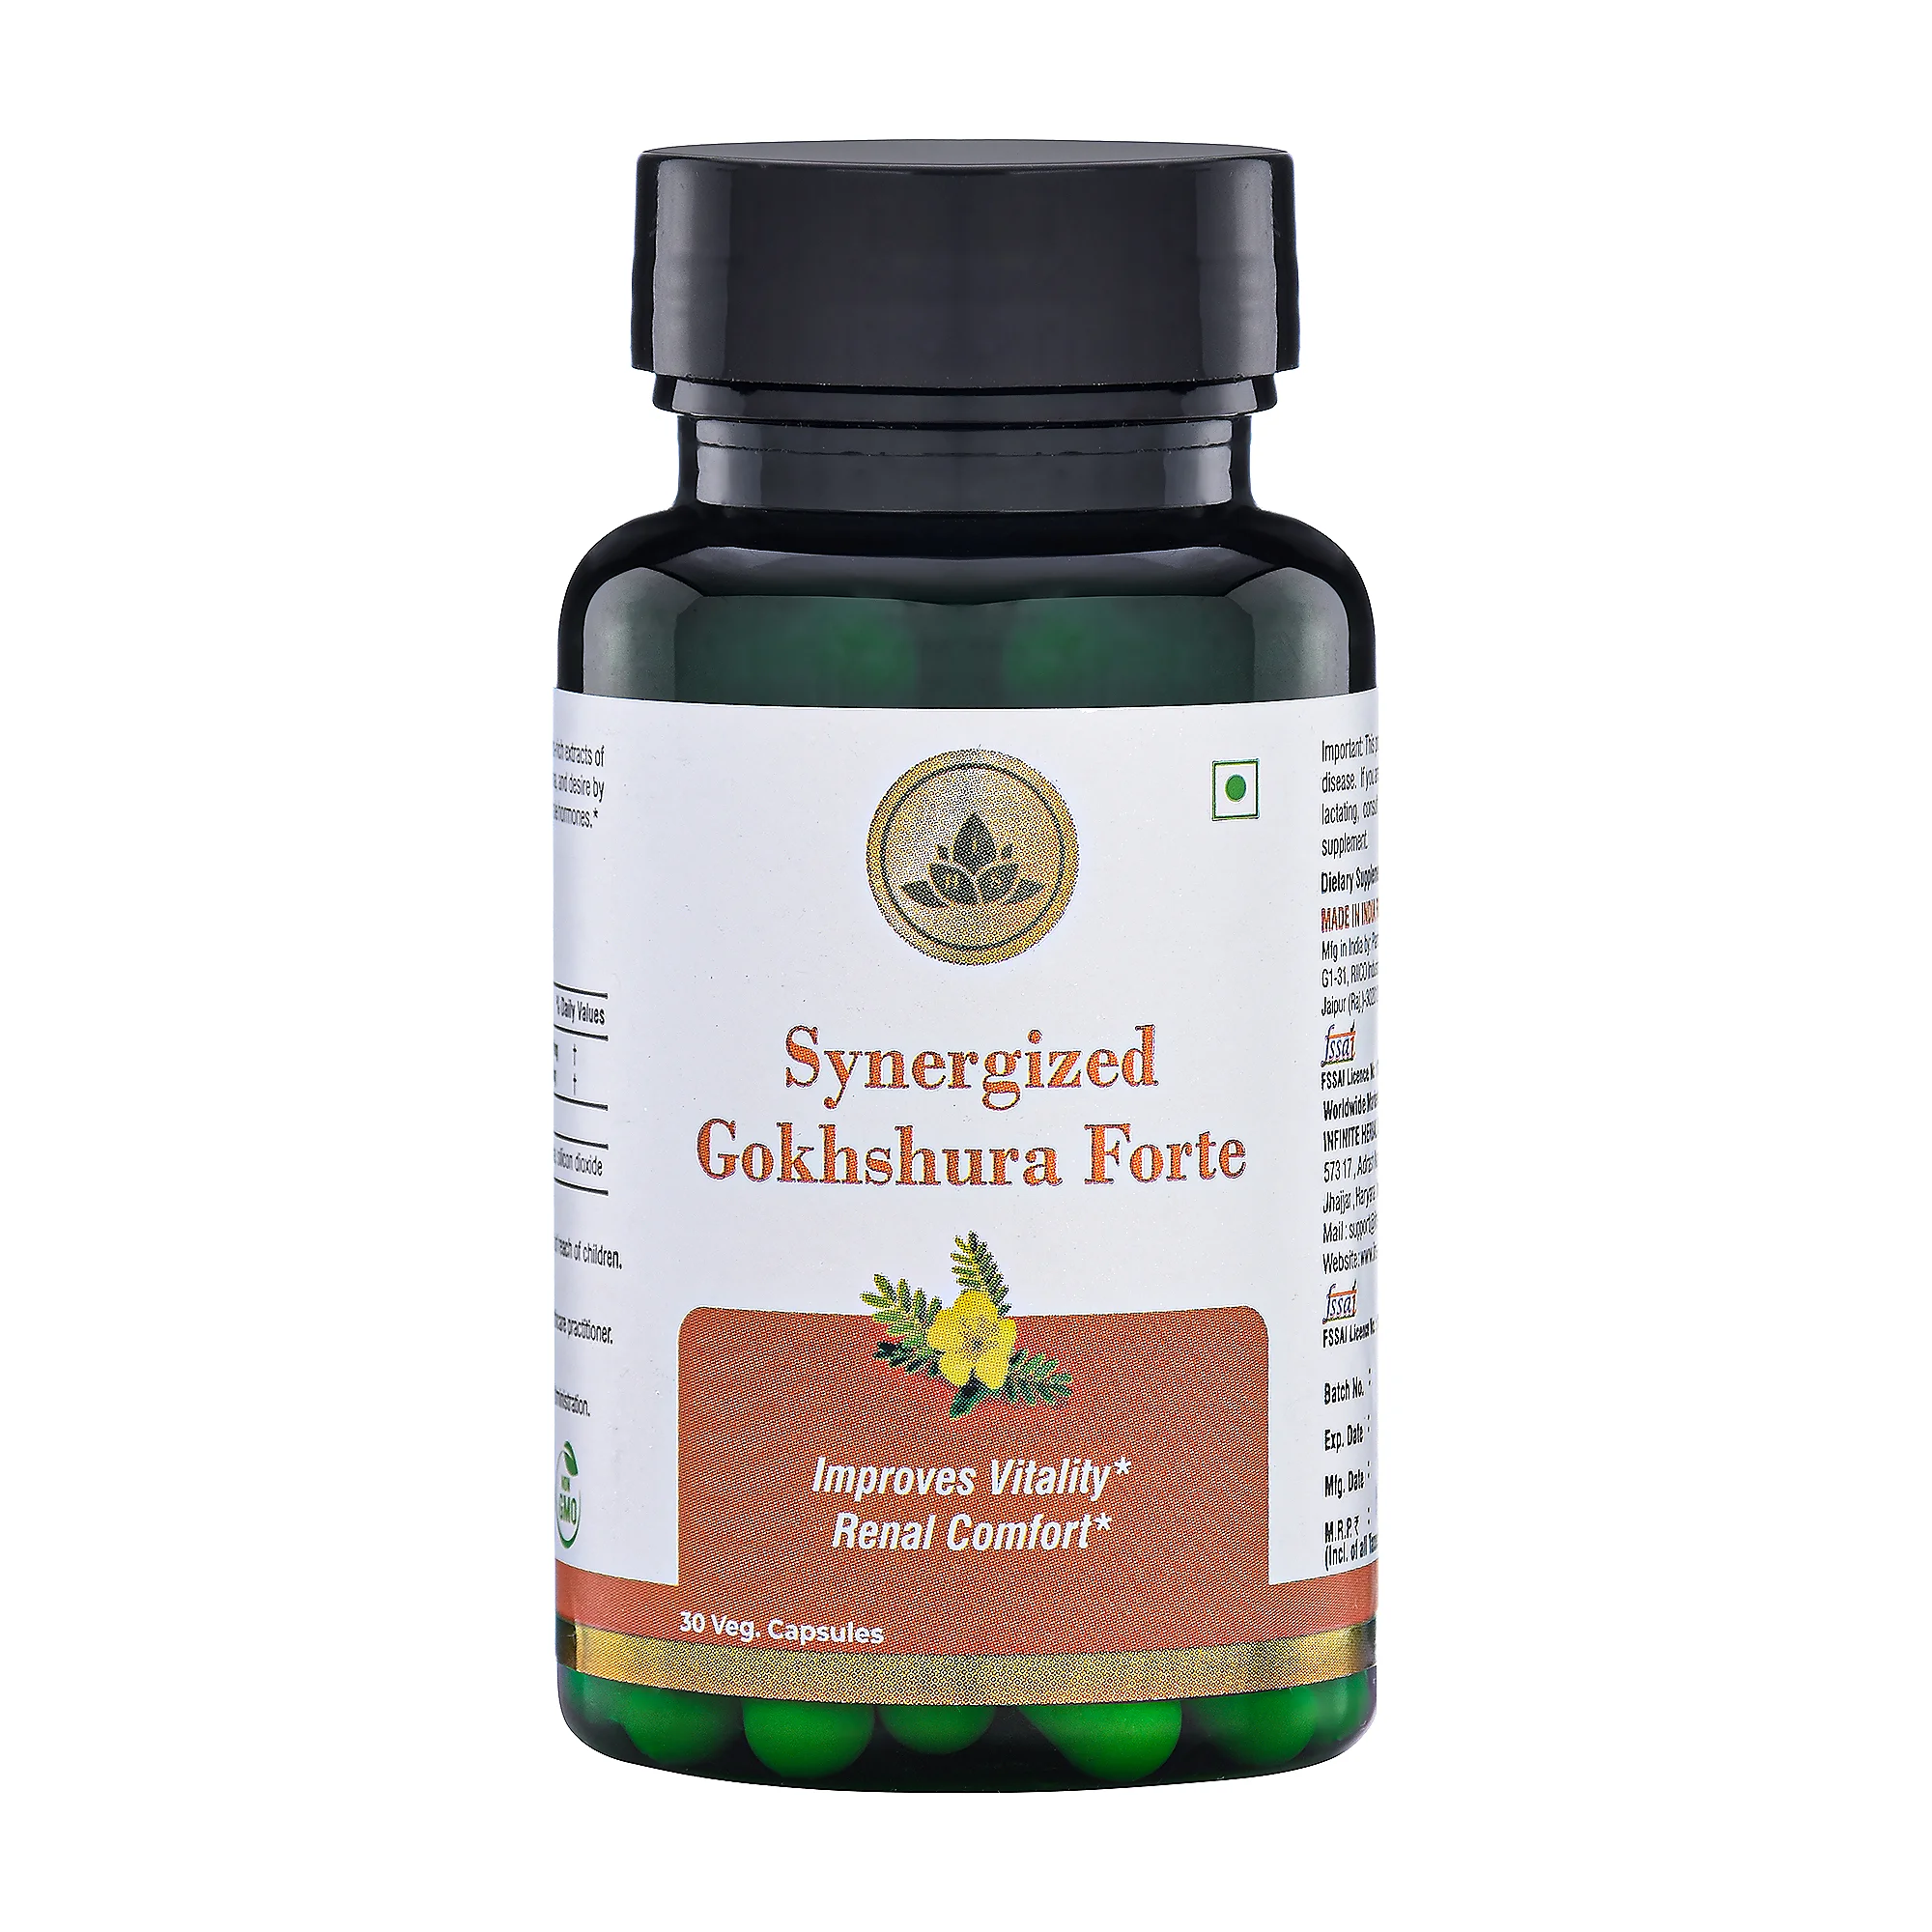 Synergized Gokhshuru Forte Herbs For Stamina And Energy